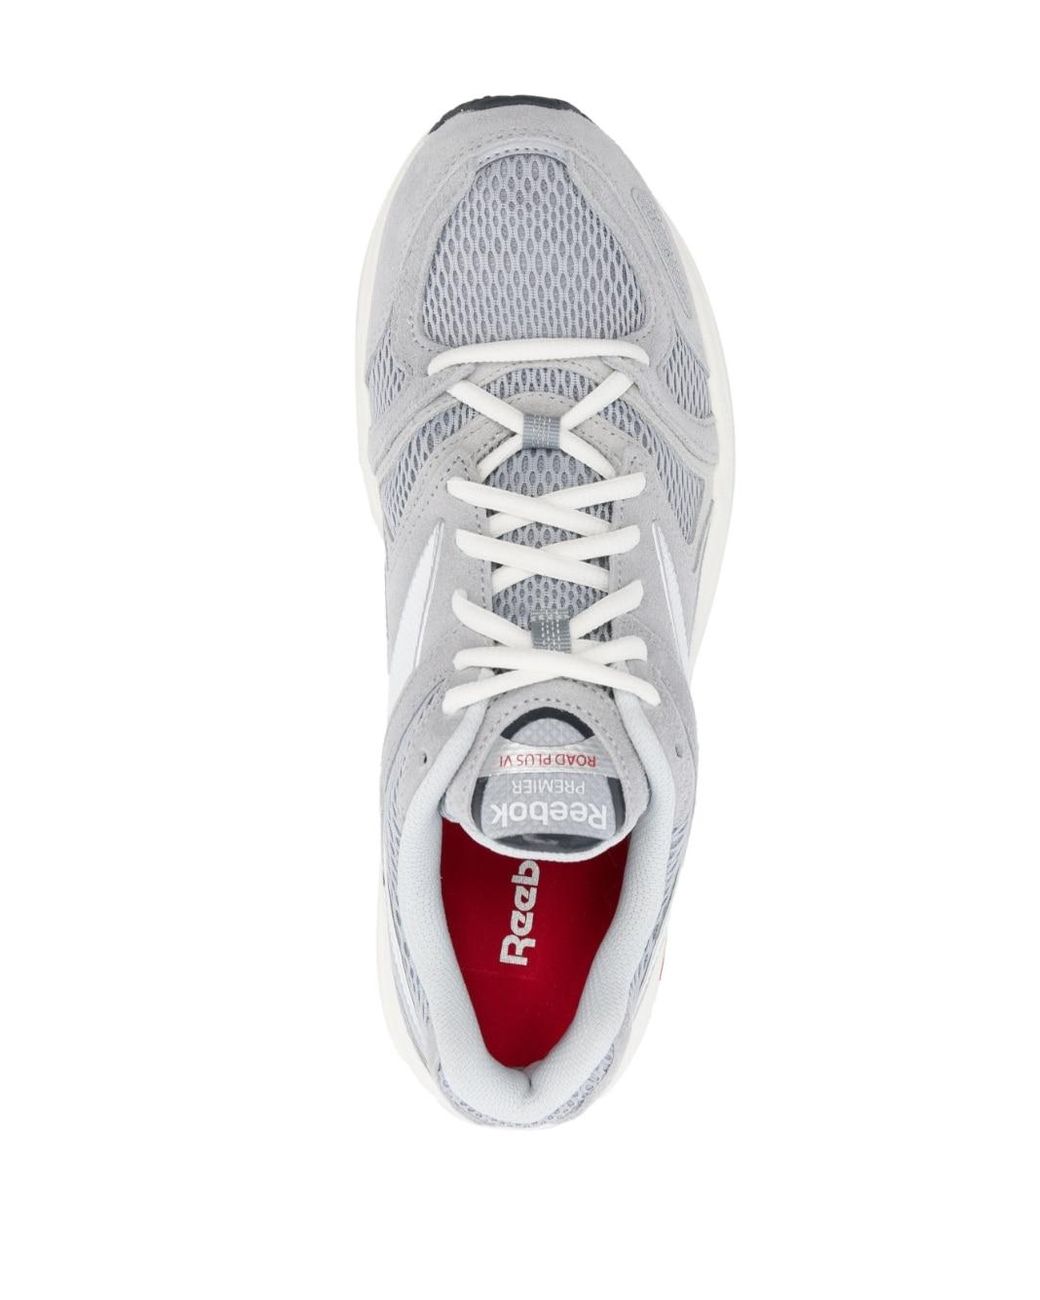 Reebok Premier Road Plus Vi Sneakers in White | Lyst